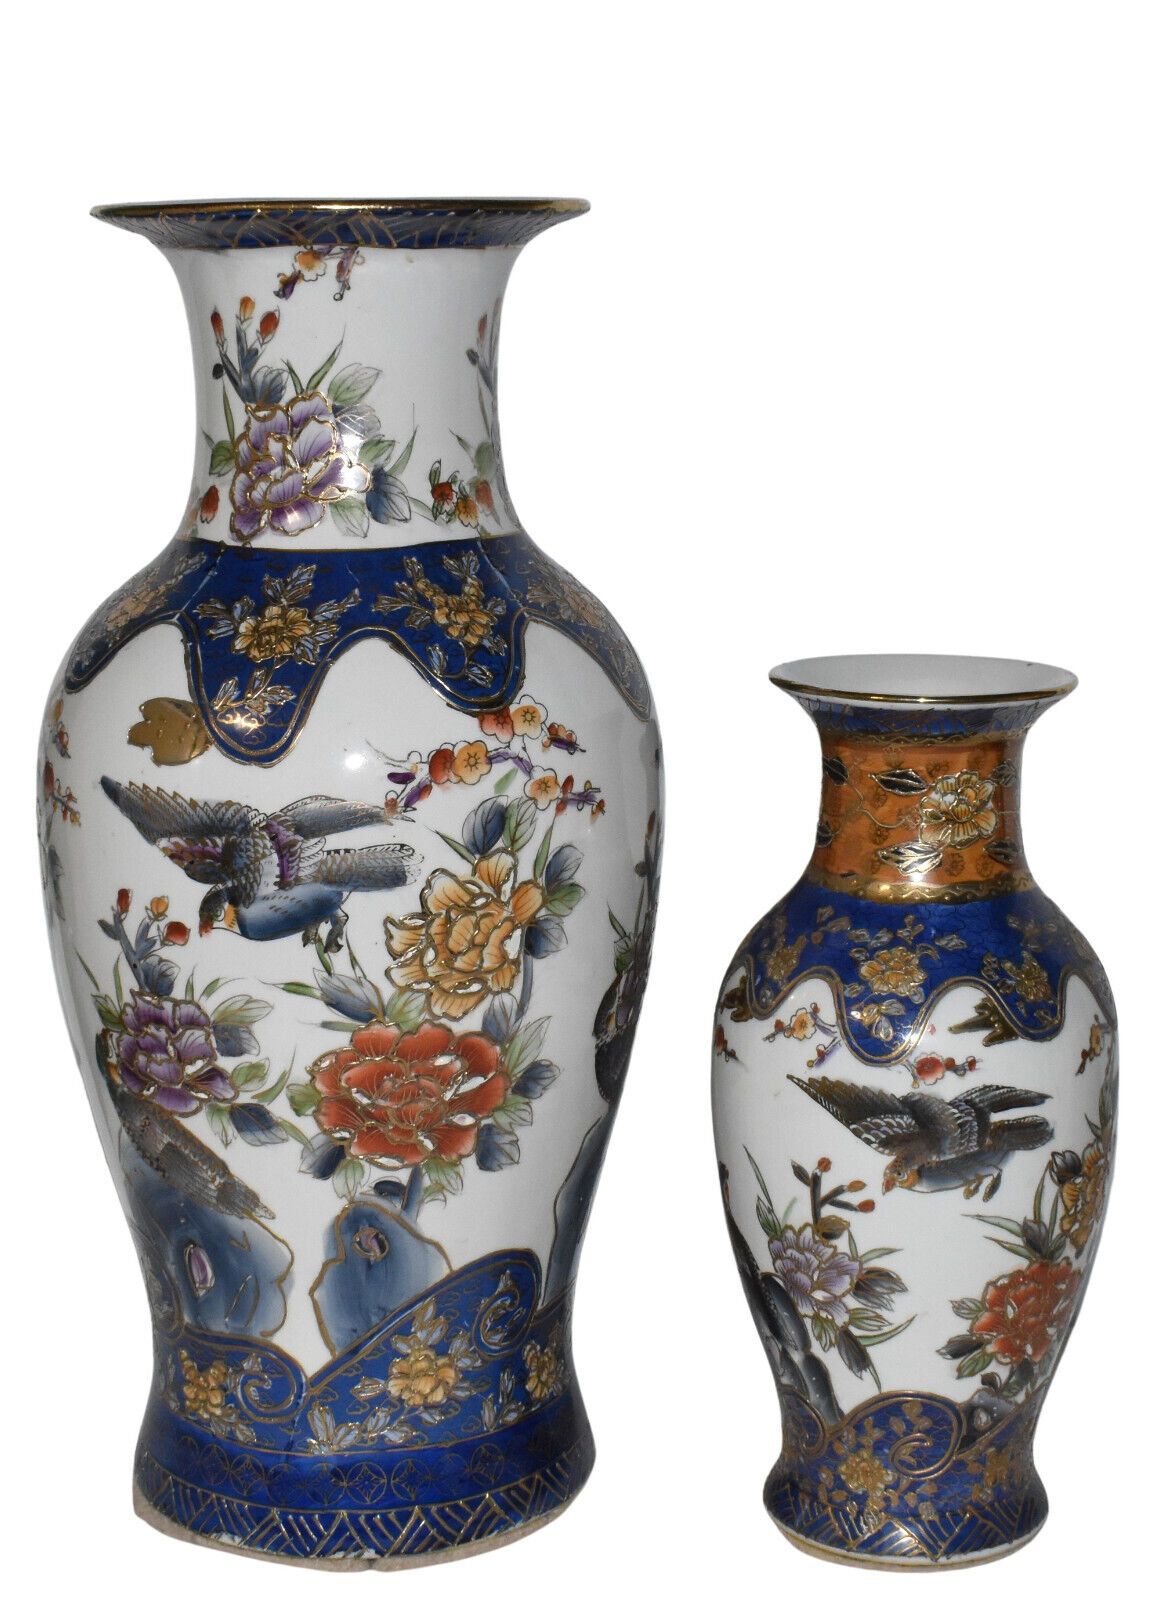 Pr Vintage Chinese Cloisonne Enamel Vases Hand Painted/Decorated Porcelain Vases